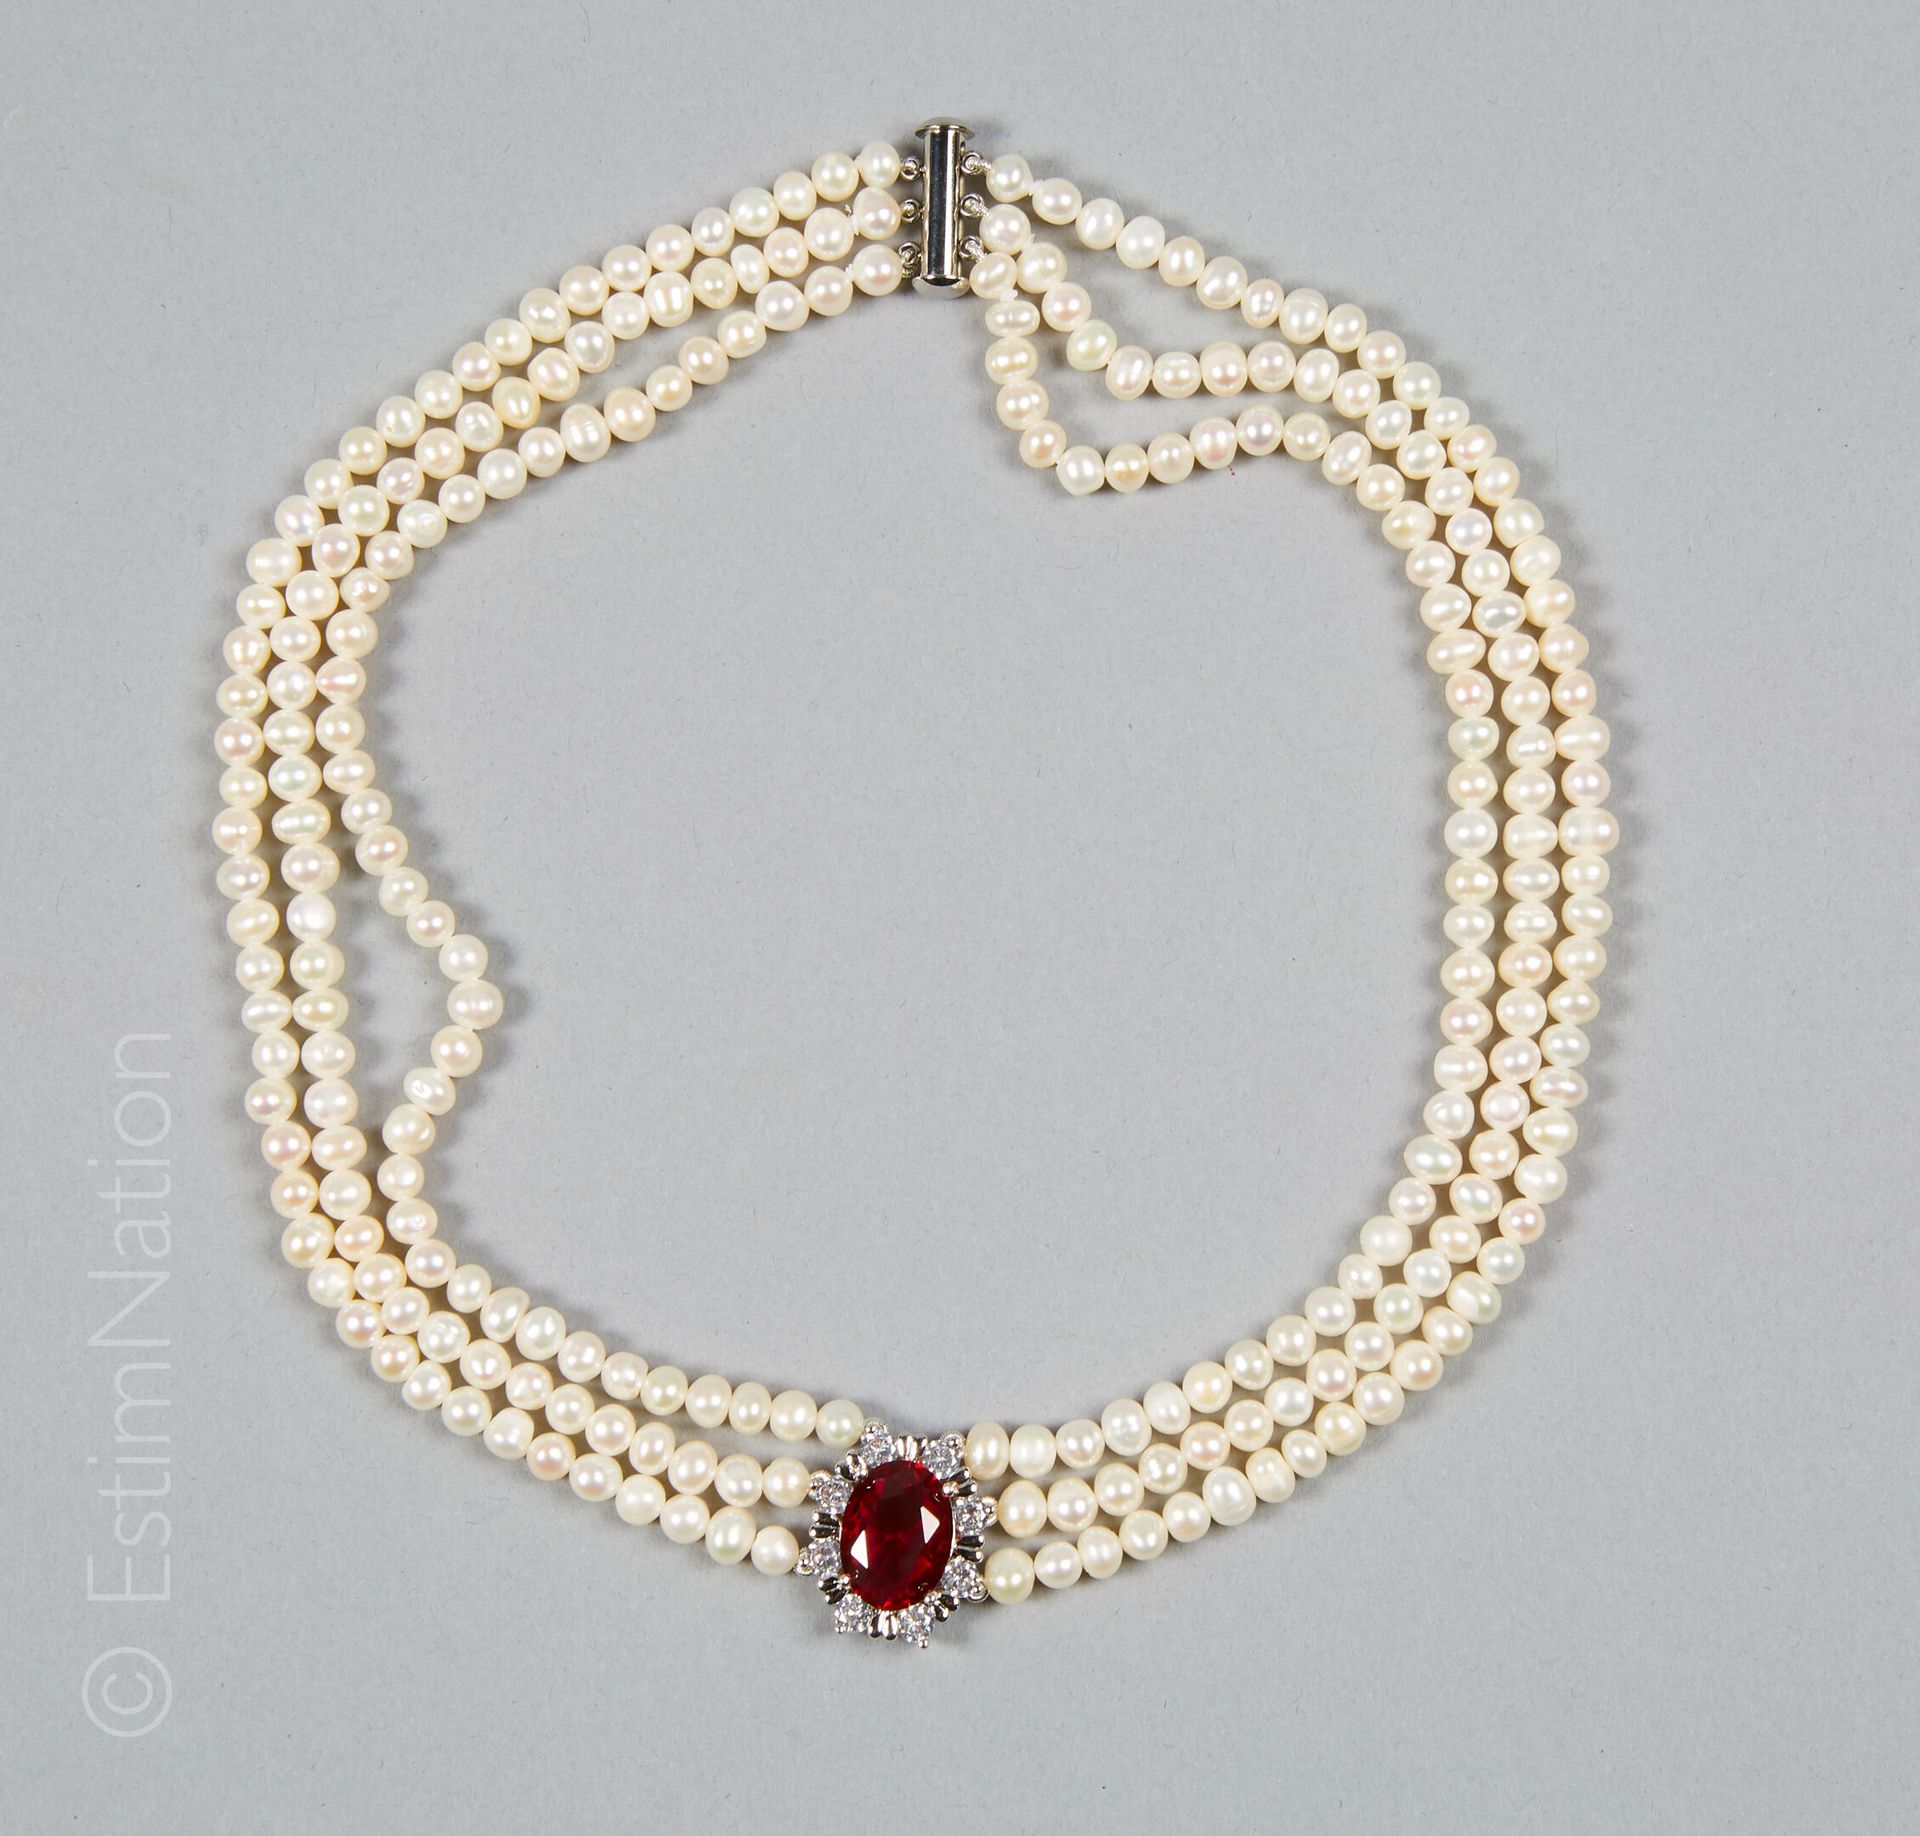 COLLIER PERLES 项链由三排淡水珍珠组成，持有一个椭圆形的图案，中心是一个刻面的红色石头，用爪子镶嵌的氧化锆。金属滑扣。

长度：41.5厘米